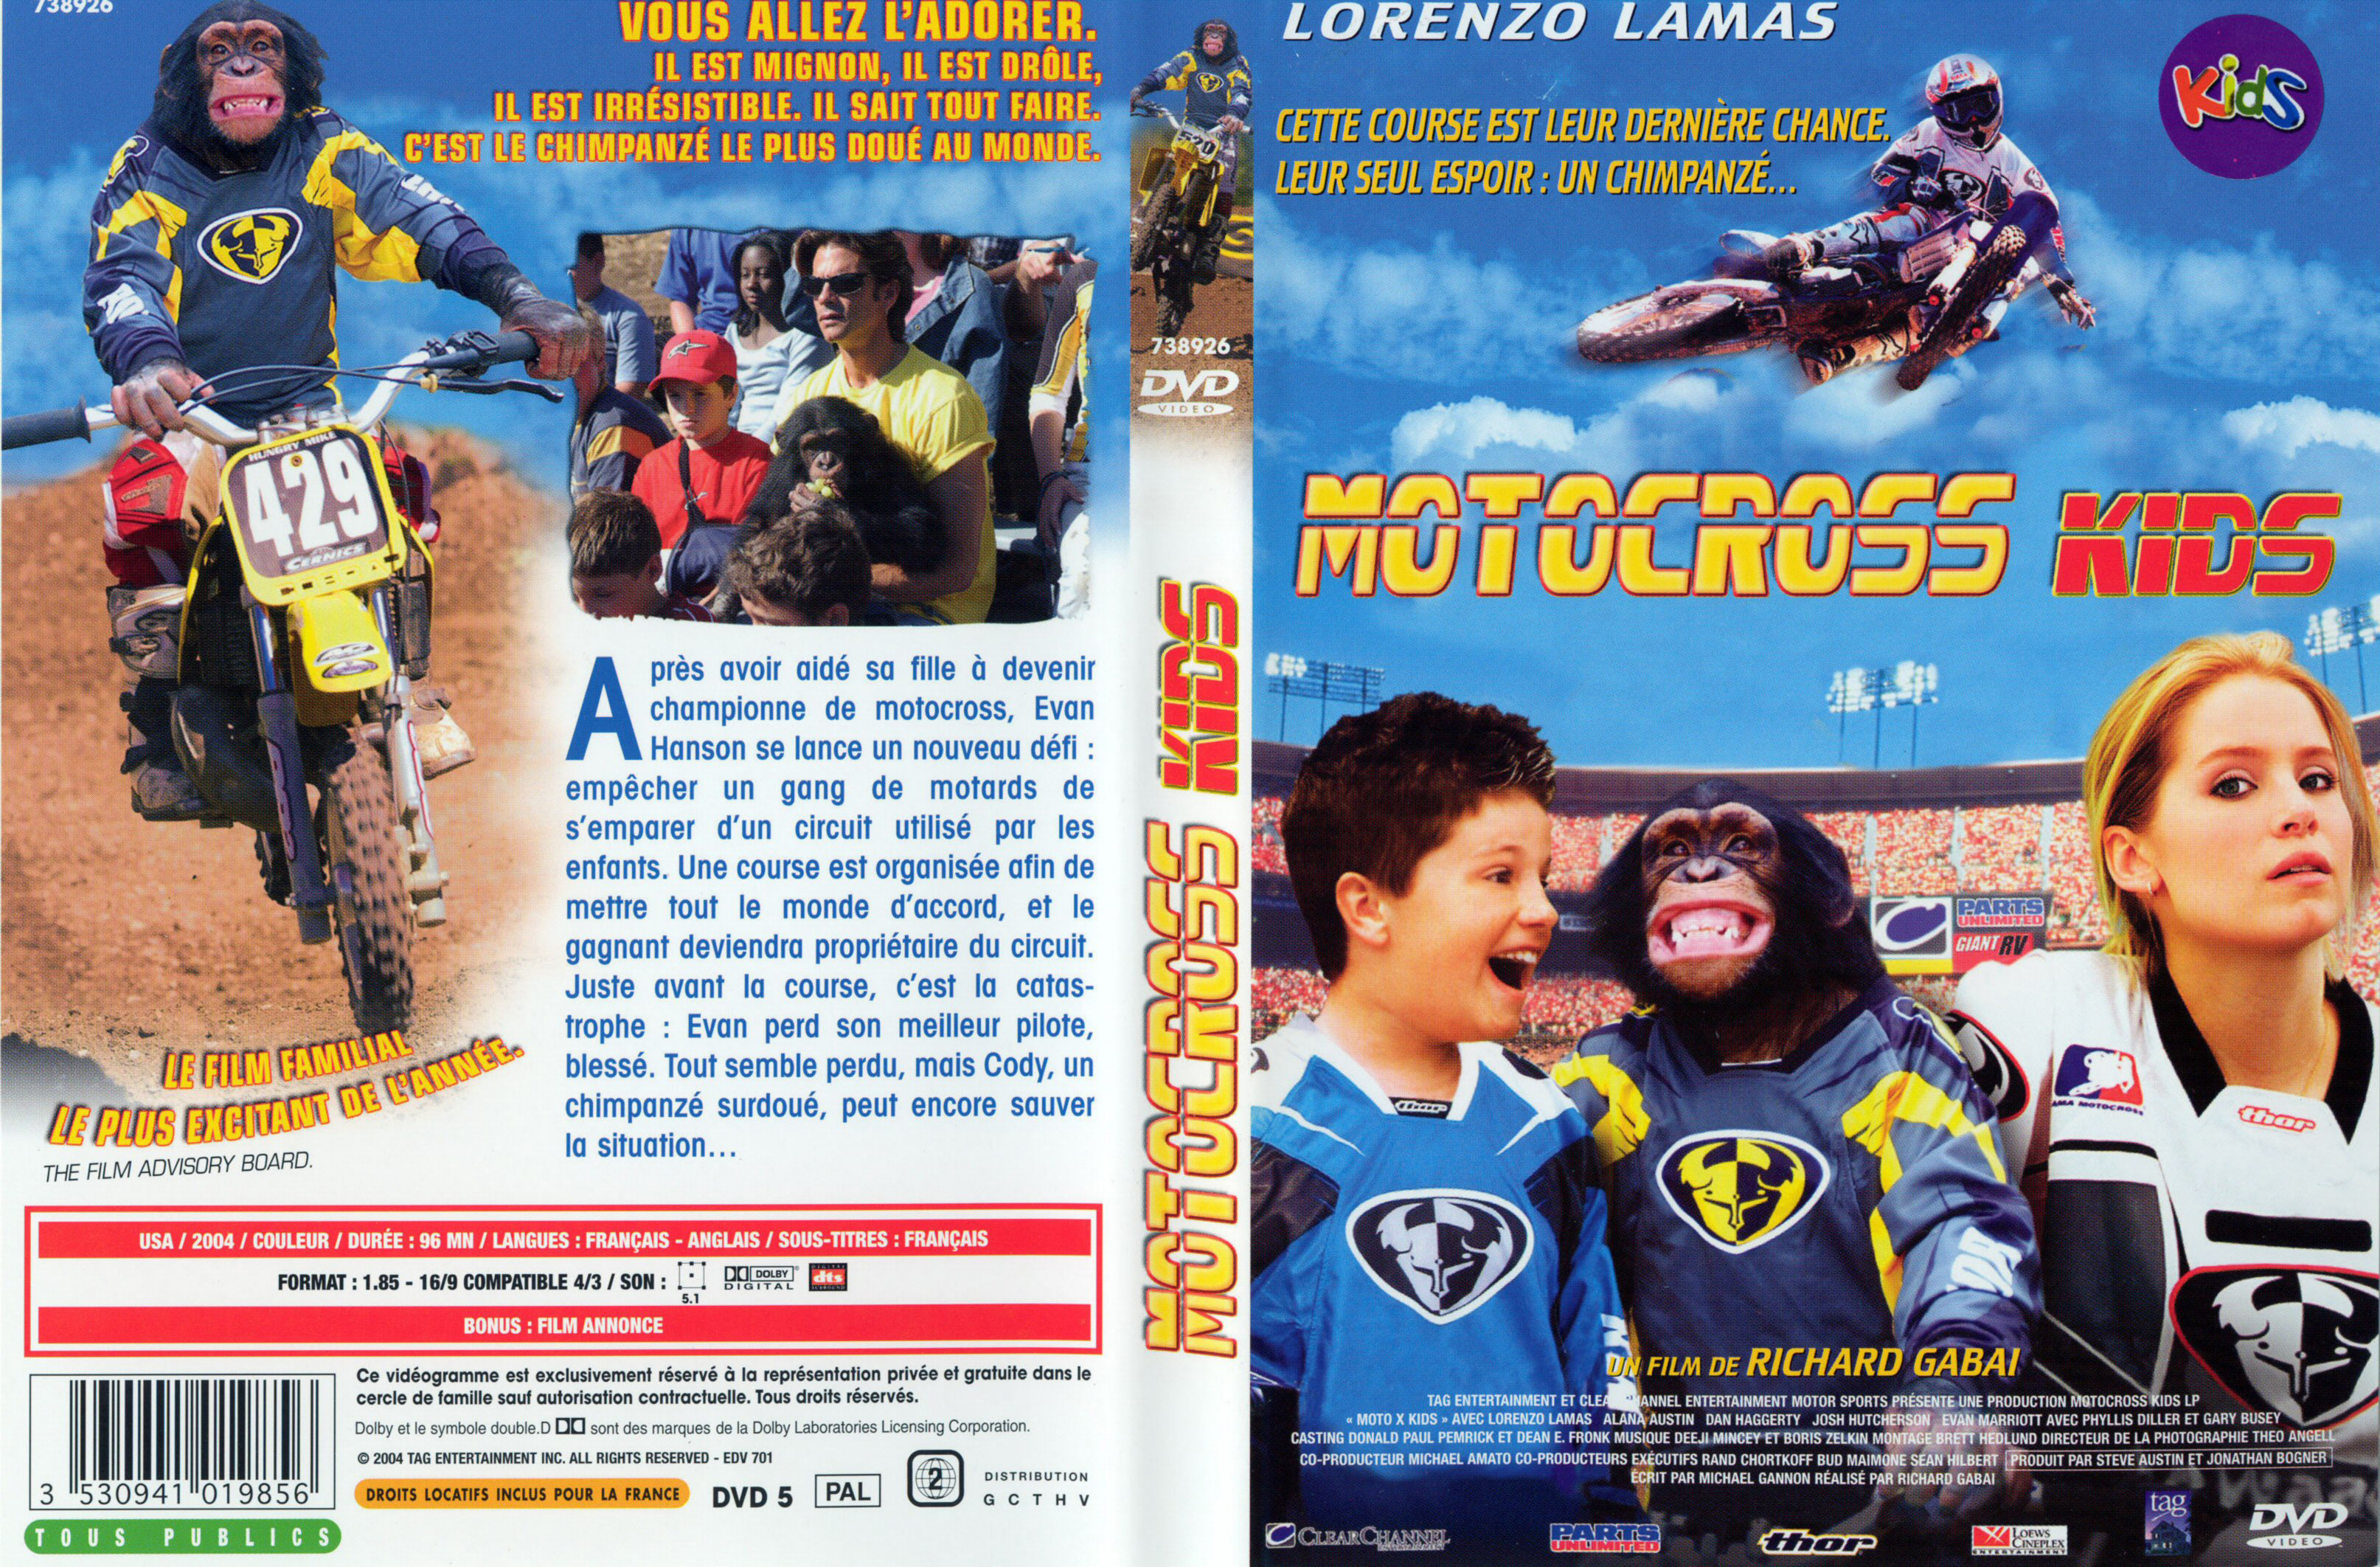 Jaquette DVD Motocross kids